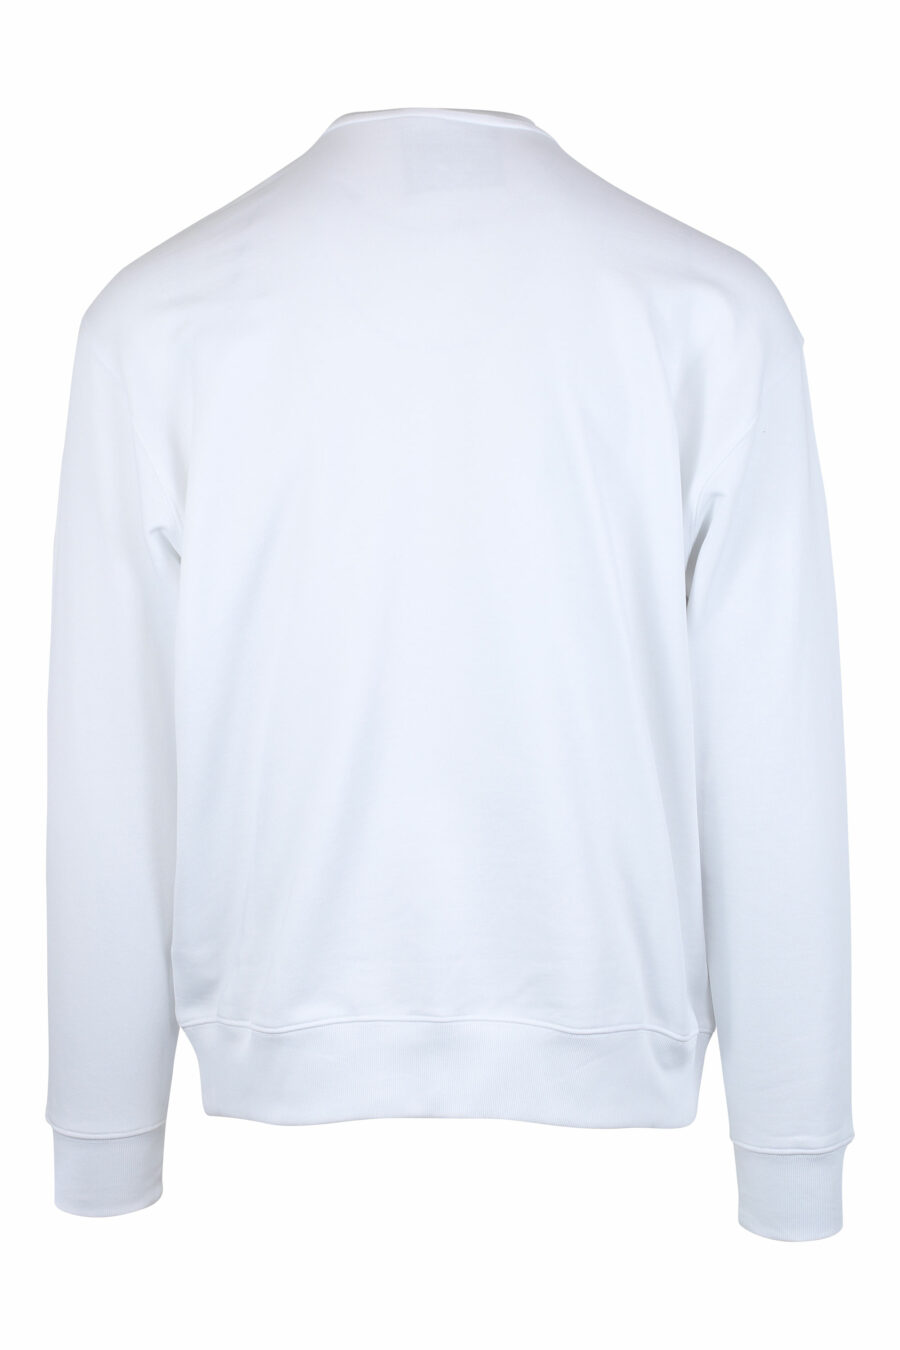 White sweatshirt with monochrome bear maxilogo - IMG 1363